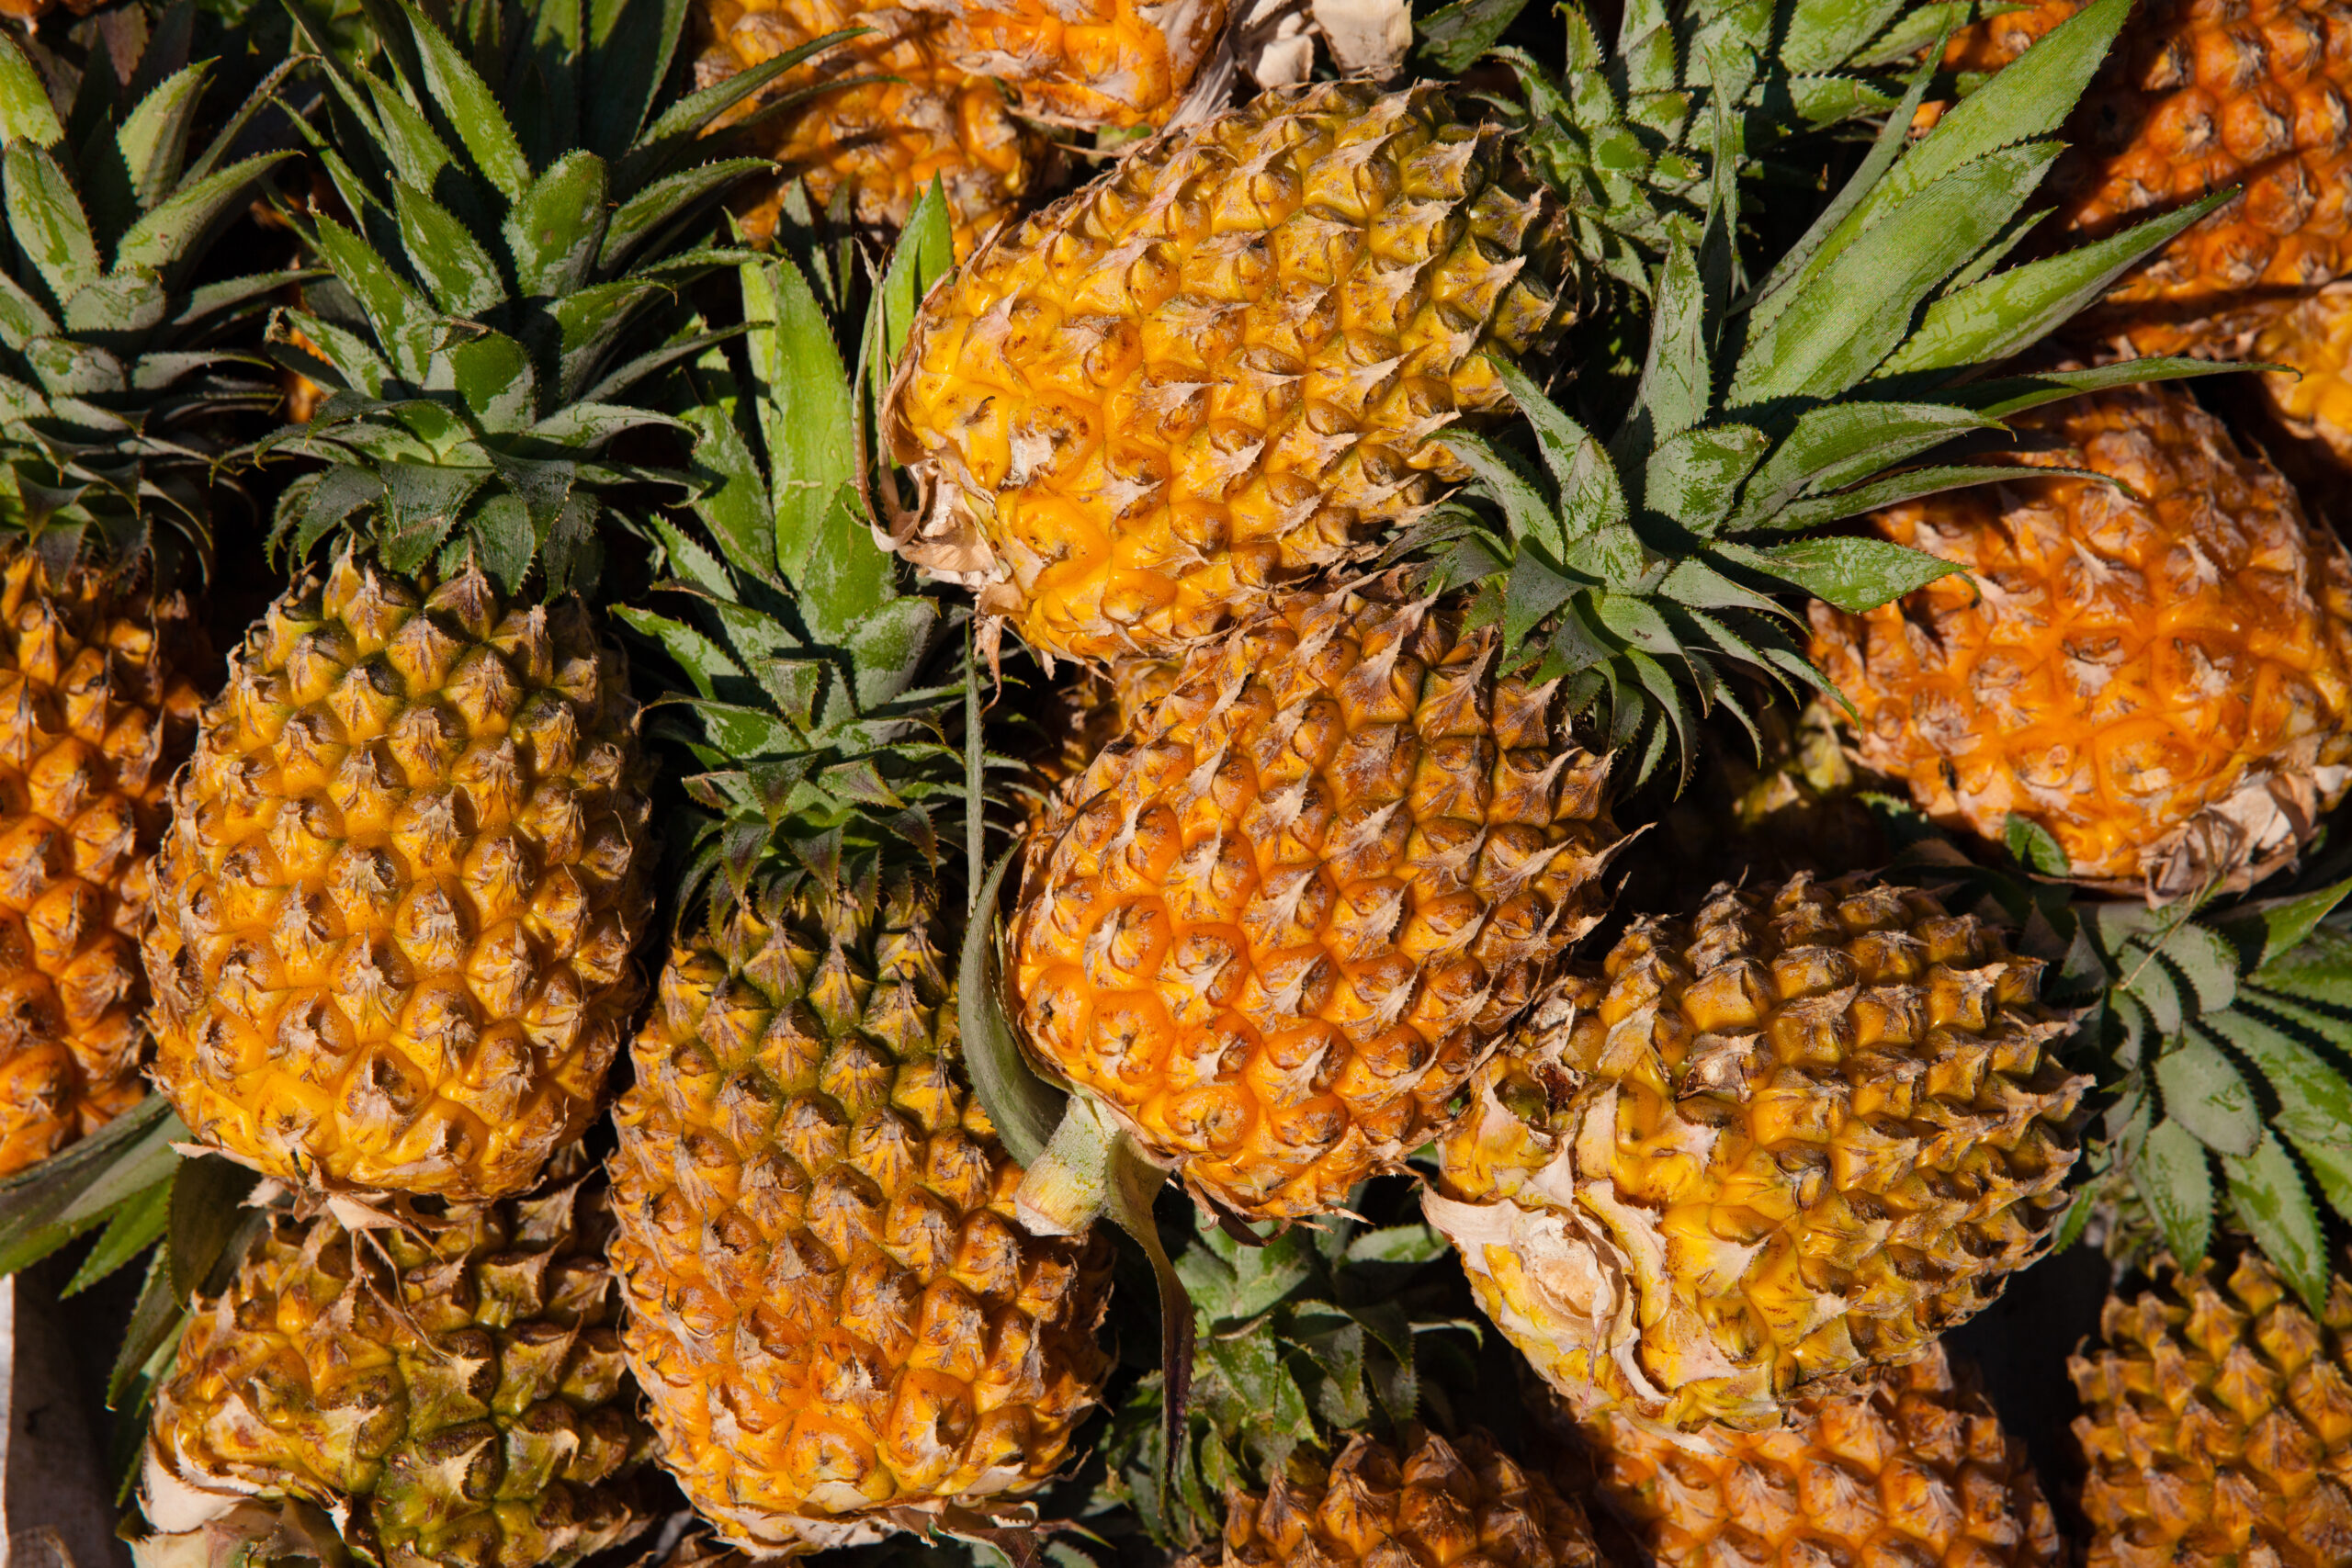 Pineapples at the street market, Vietnam